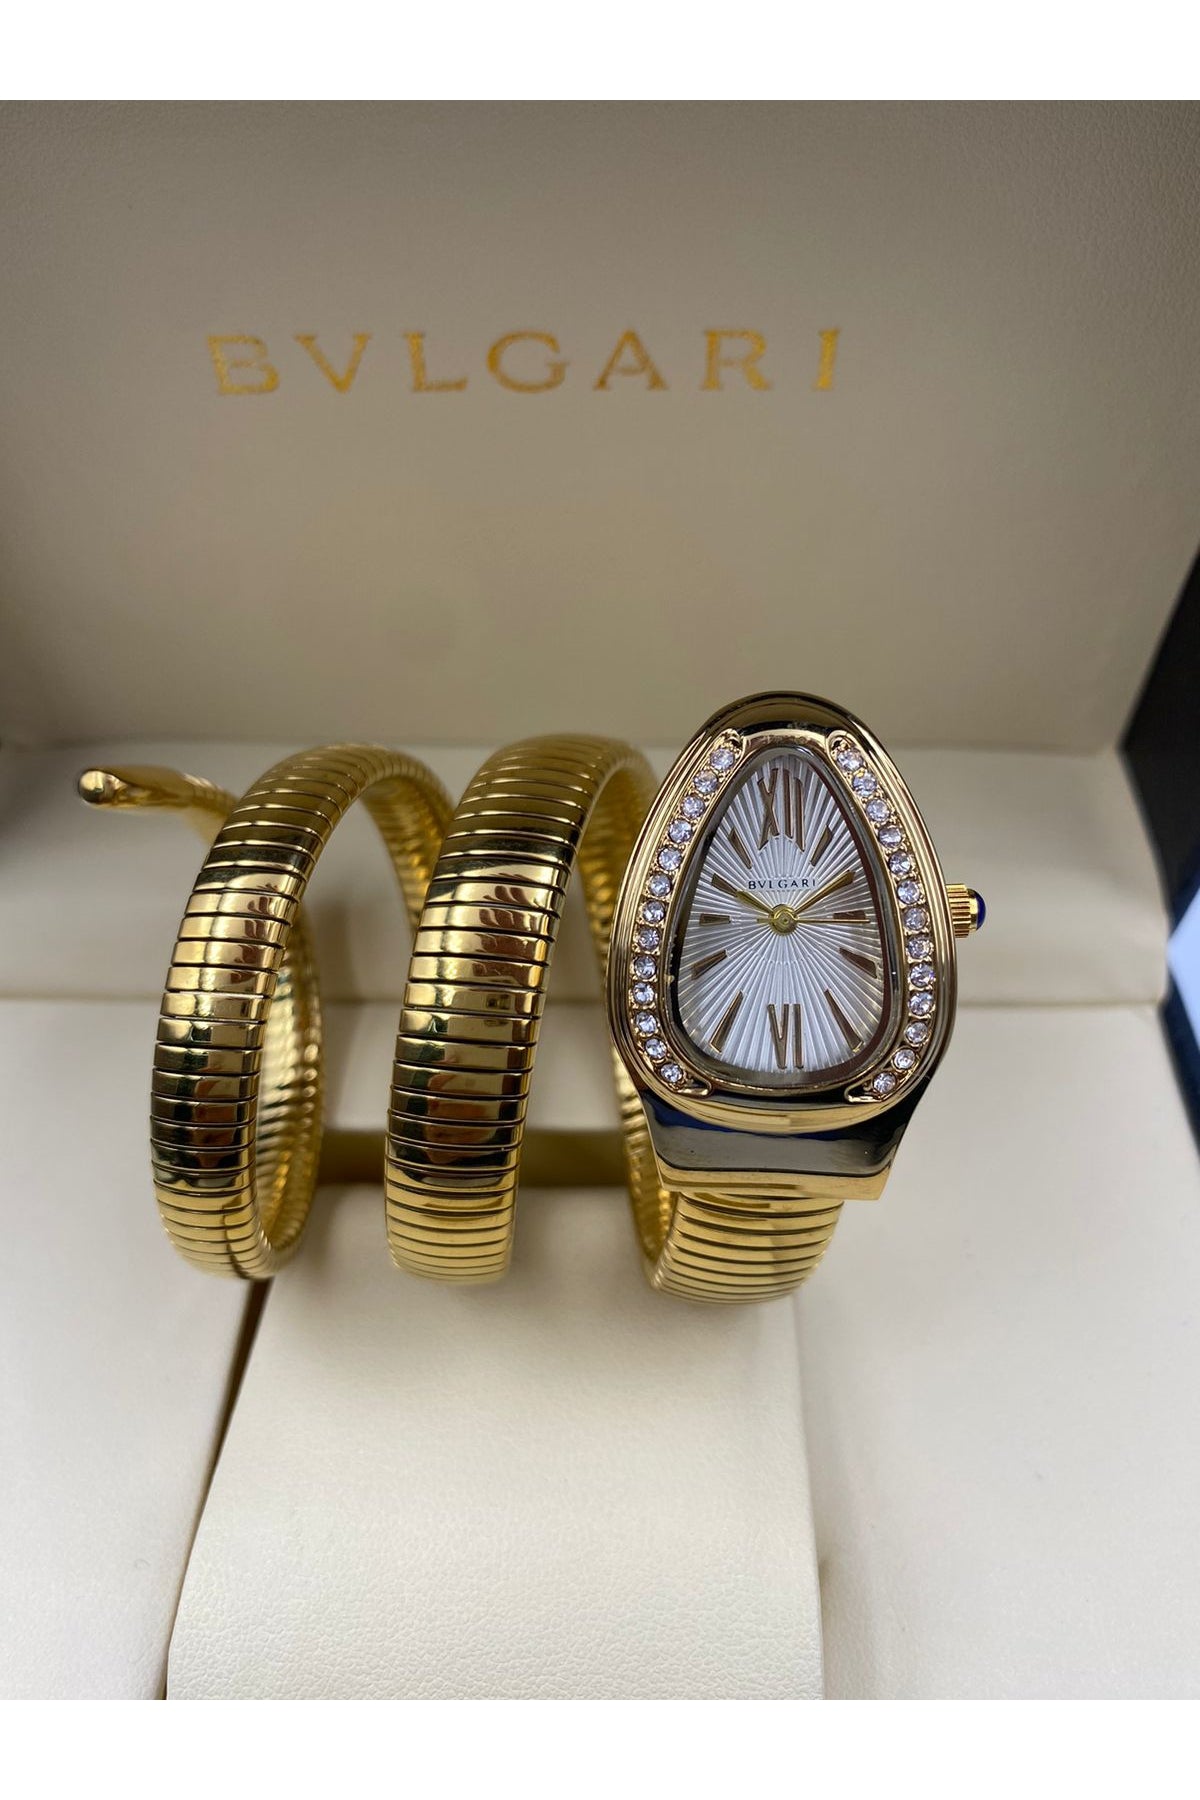 BVLGARI - Snake-Shaped Ladies Bracelet Watch - UAE